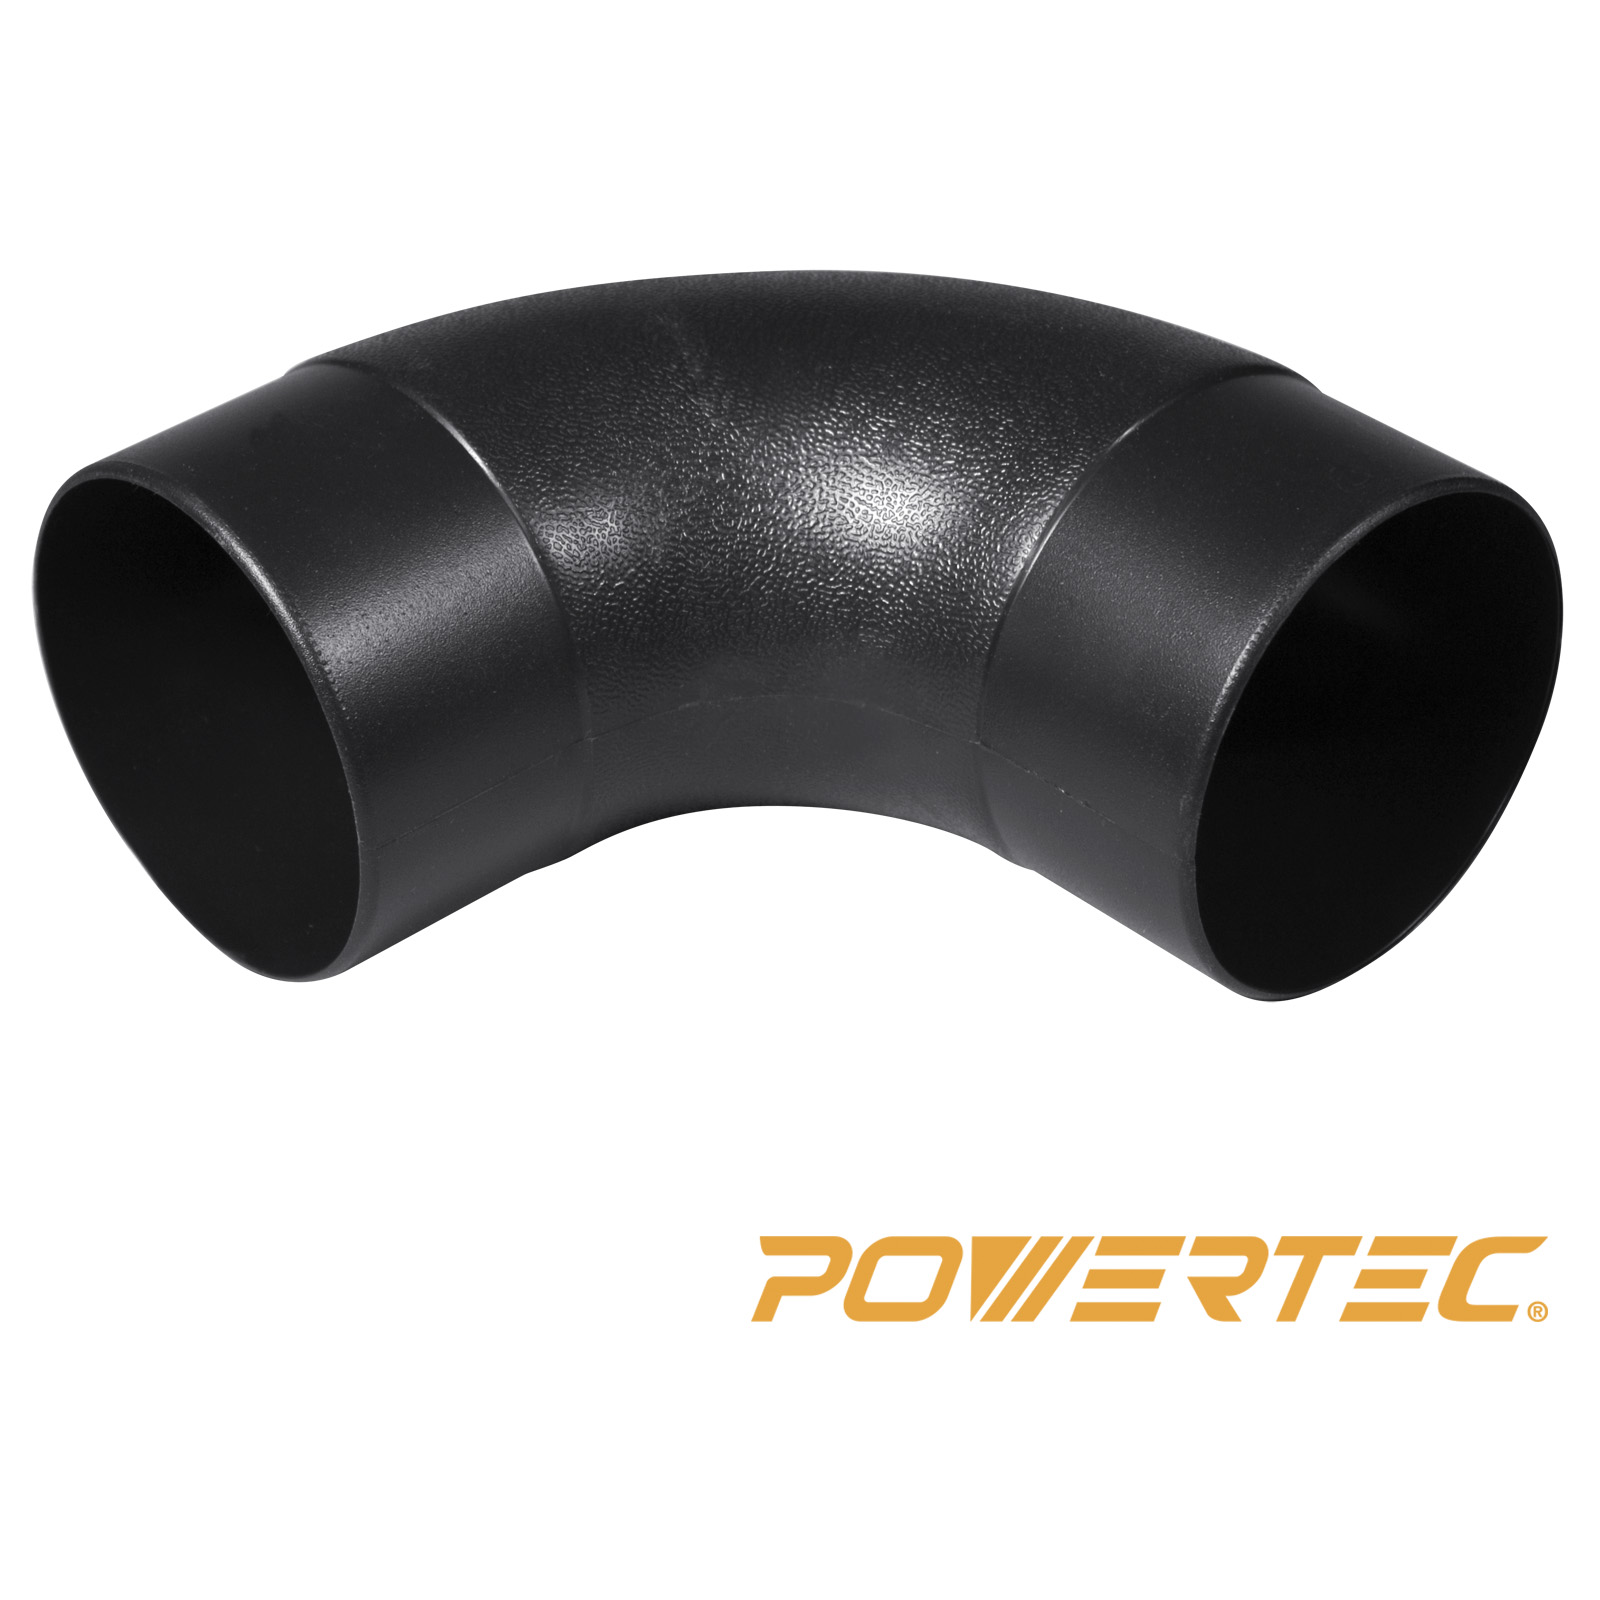 Powertec 70105 4-Inch Elbow Dust Hose Connector